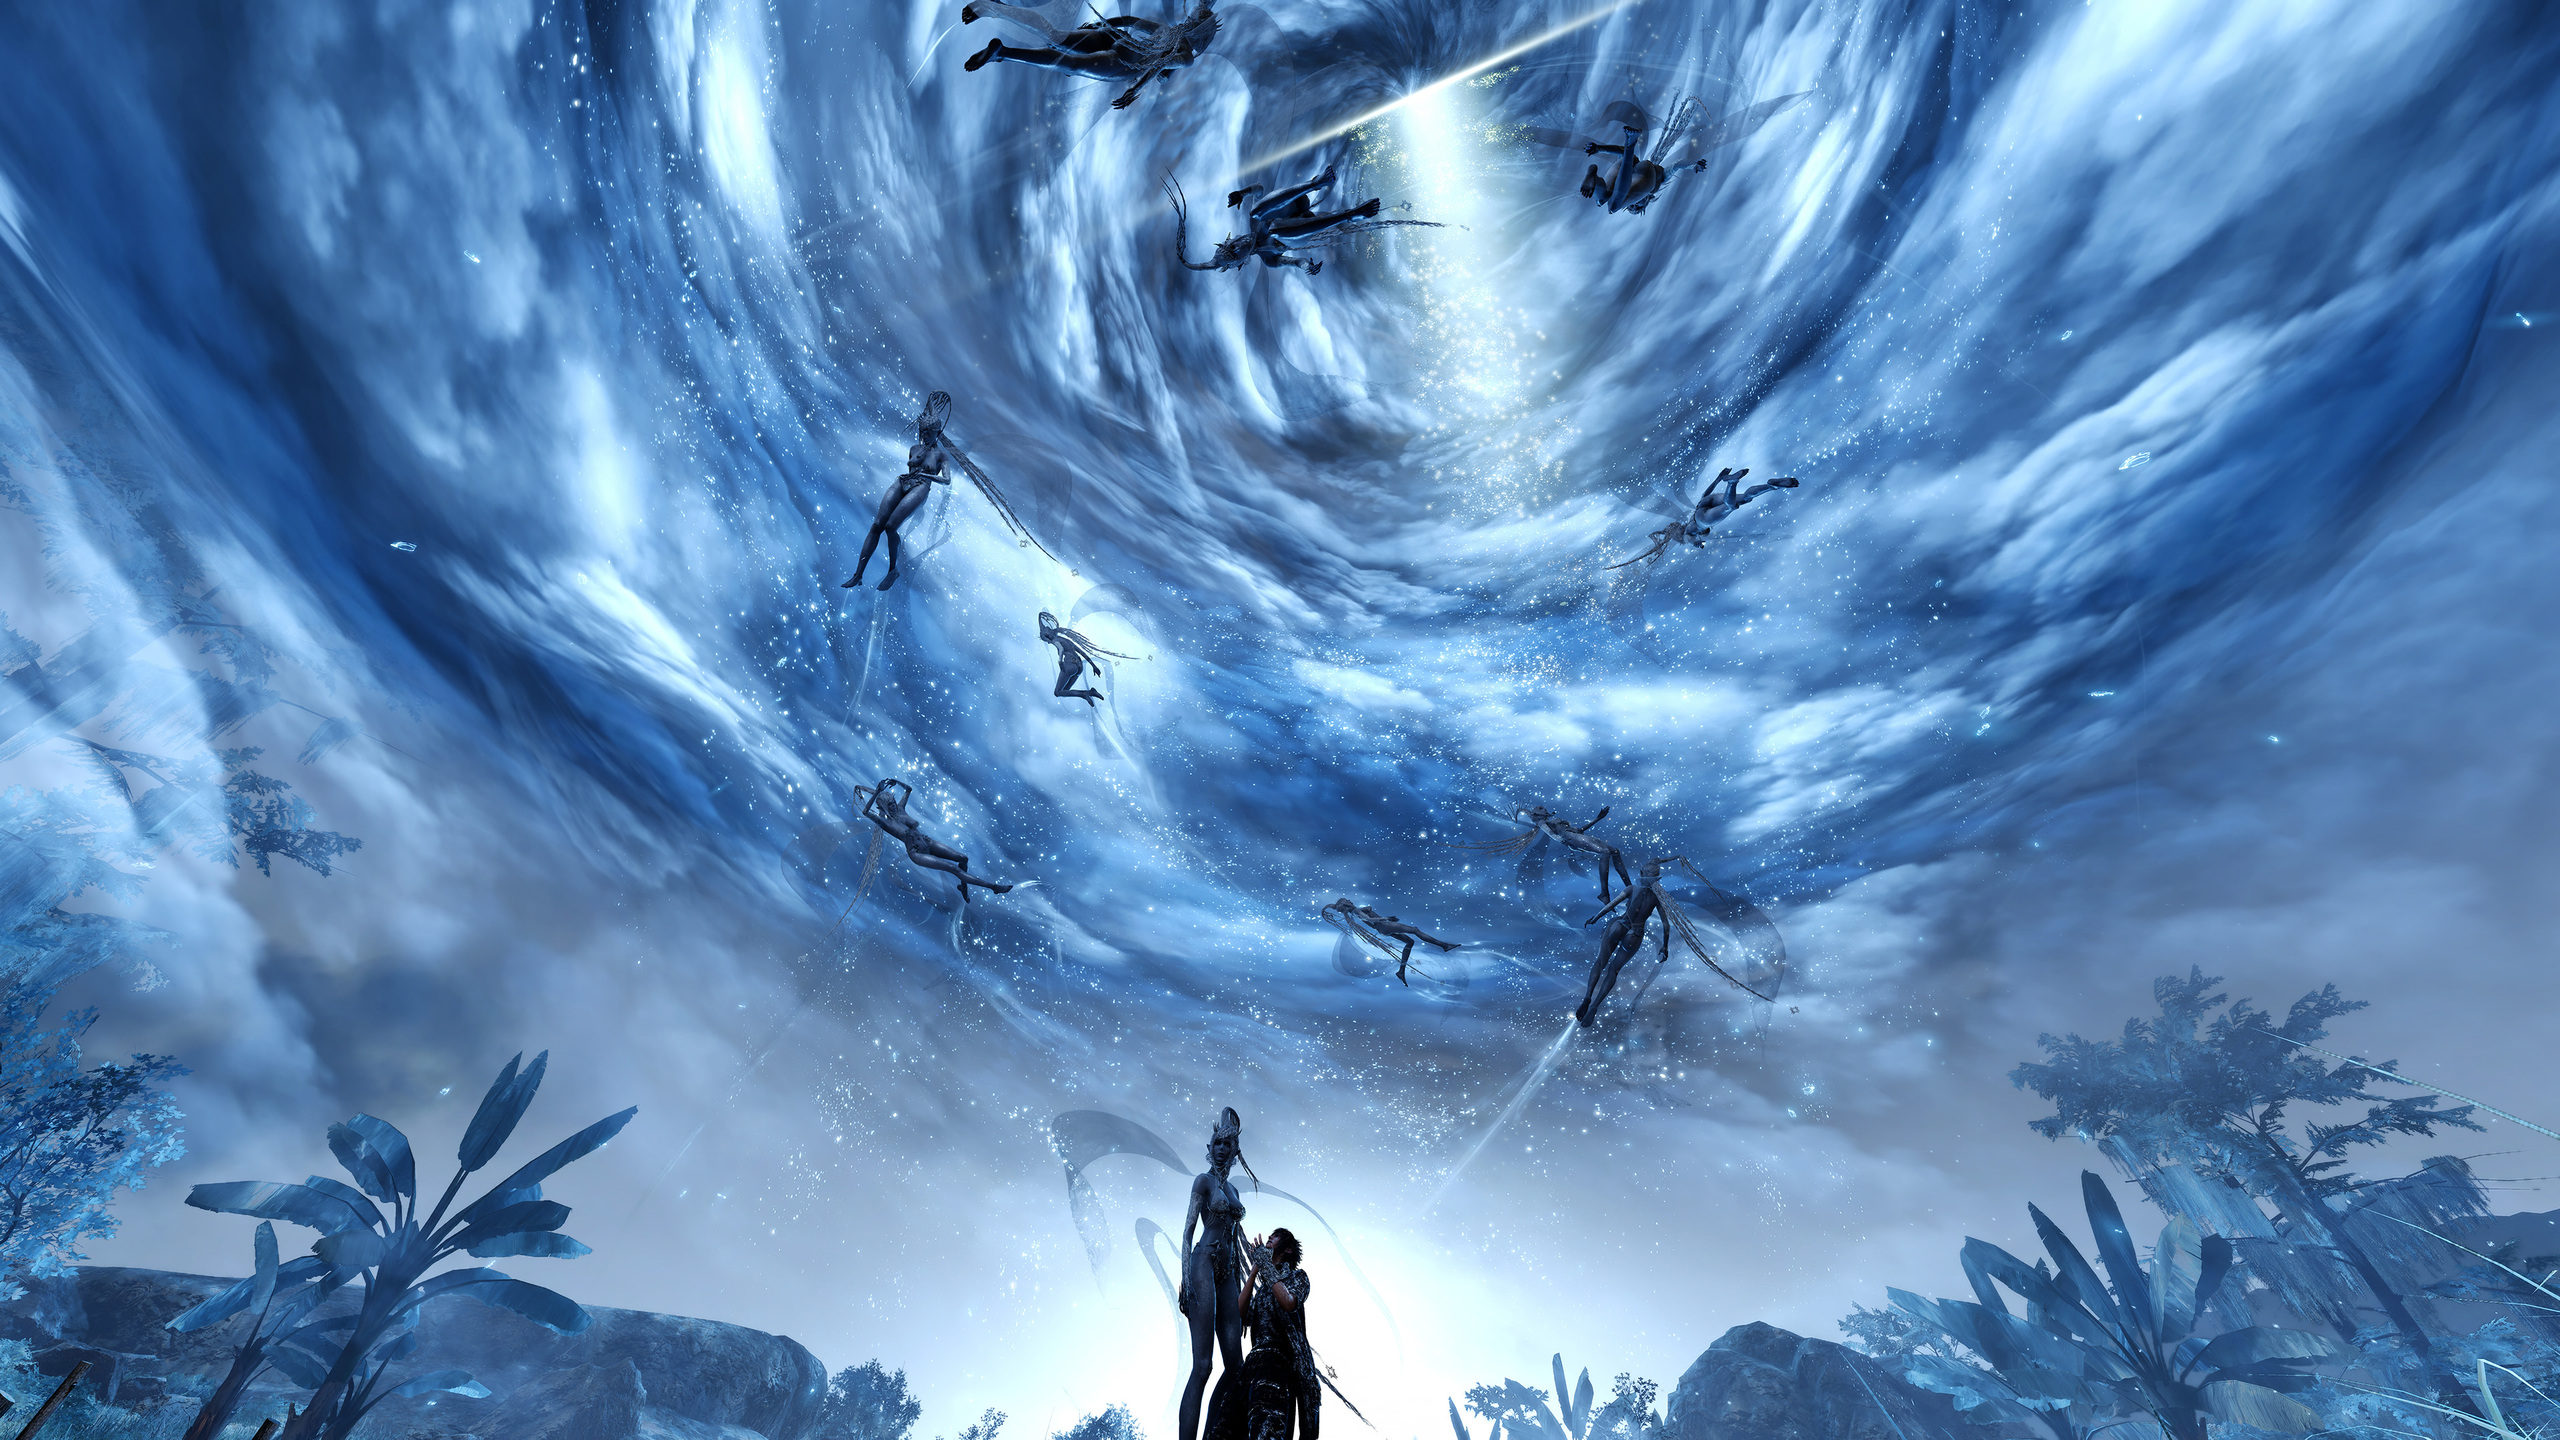 1440p Final Fantasy Xv Backgrounds